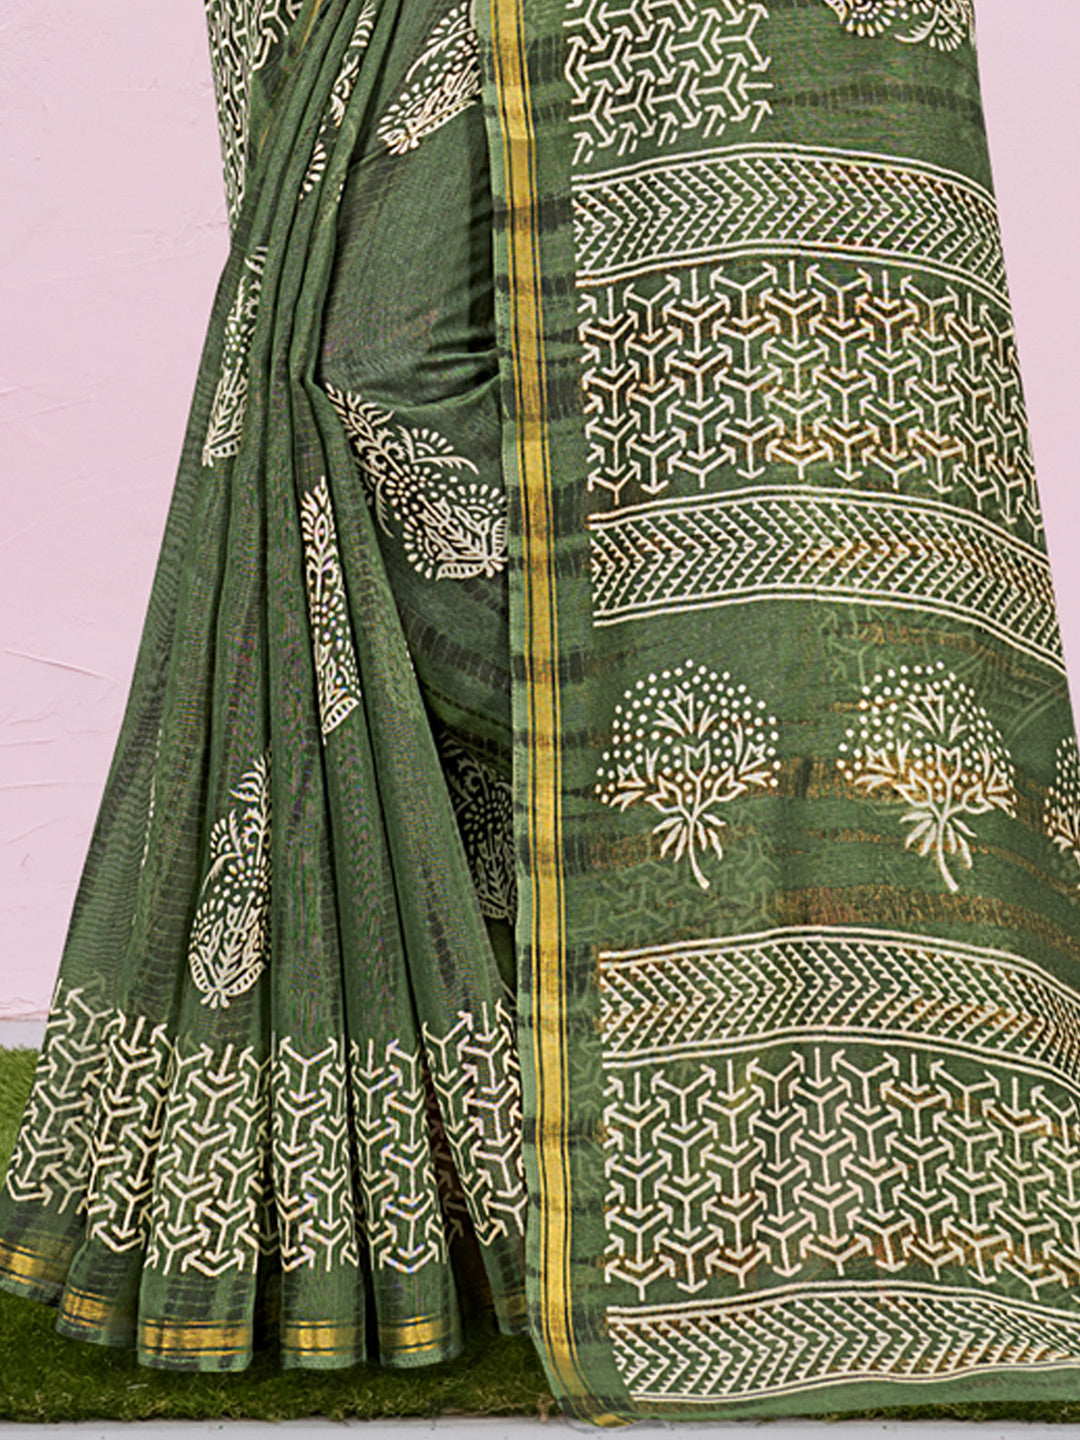 Women's Green Cotton Printed Traditional Saree - Sangam Prints